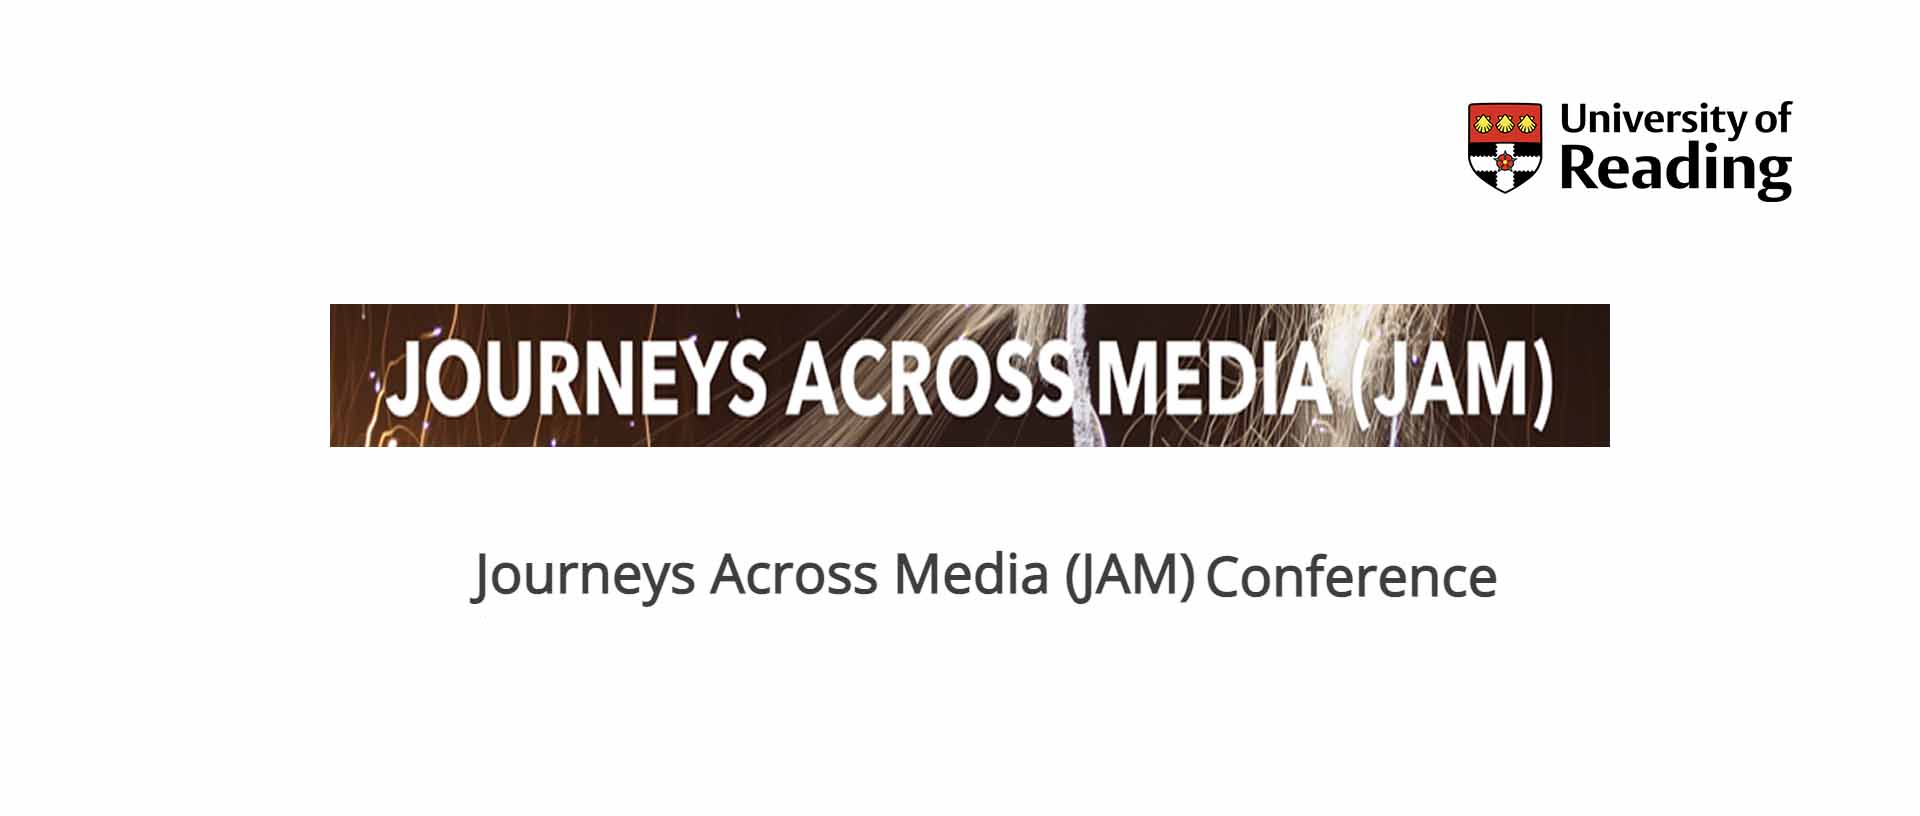 Journeys Across Media Conference – University of Reading